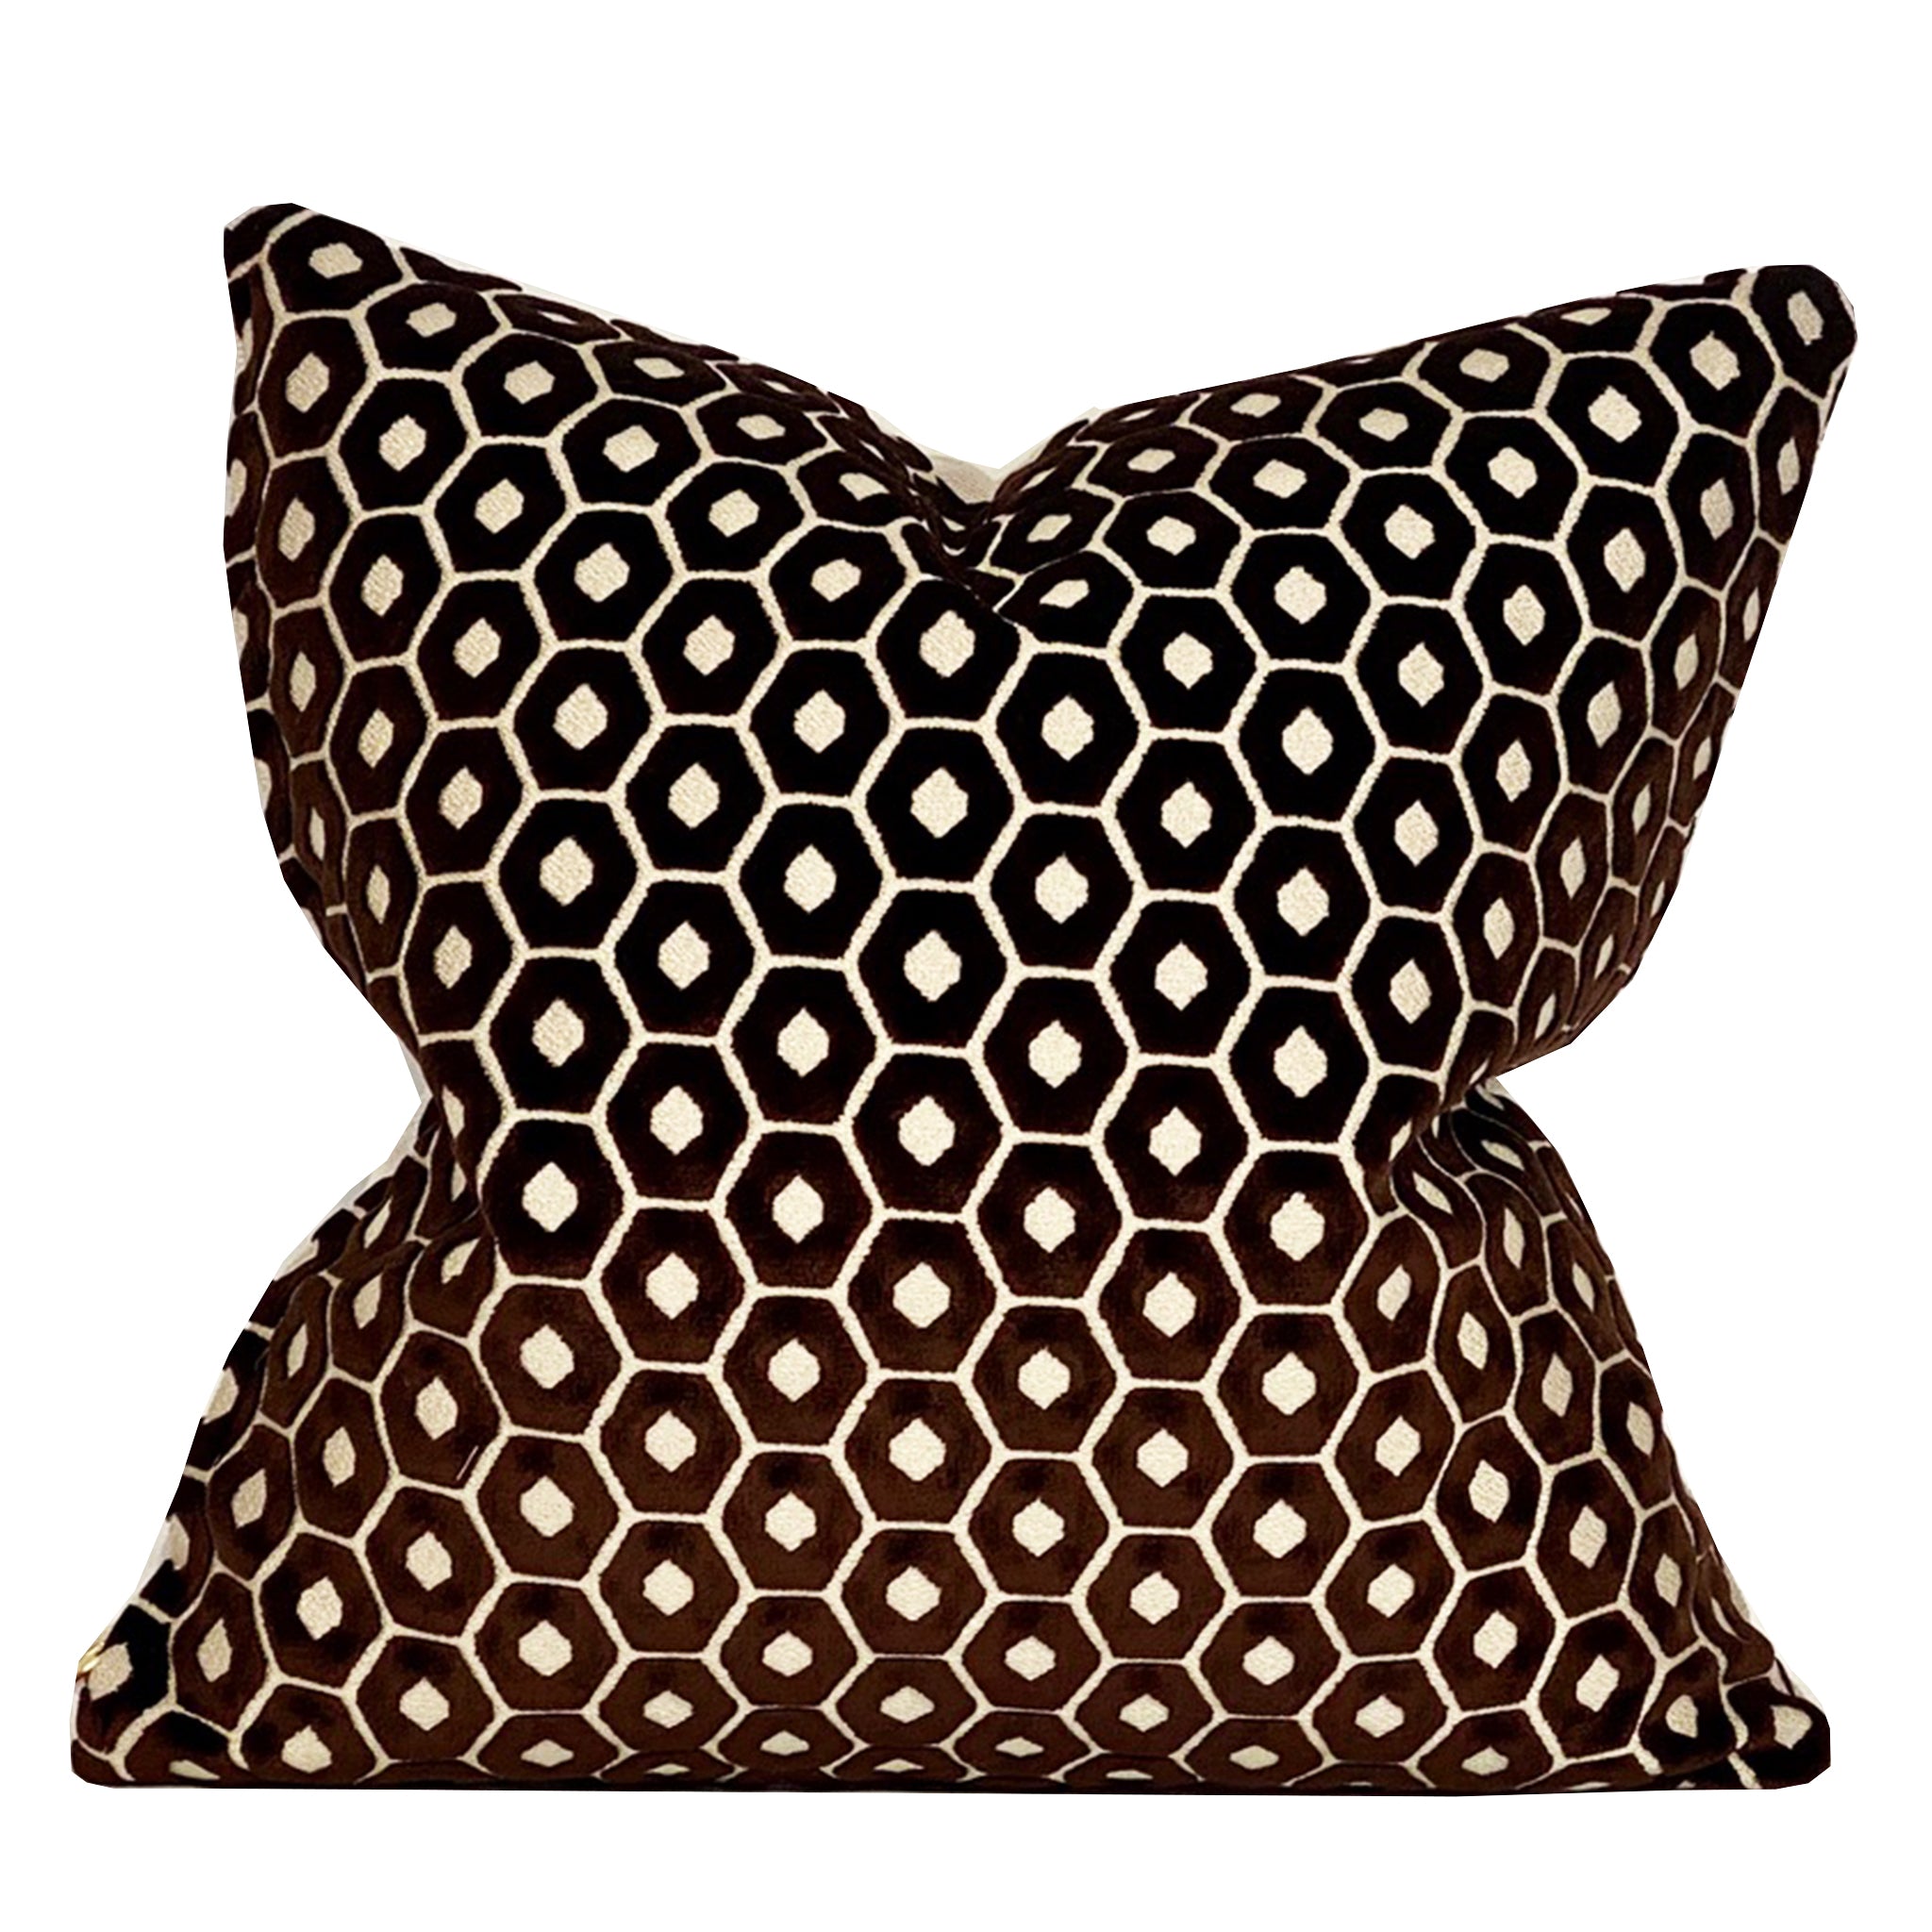 Beatrice Honeycomb Velvet Pillow Cover